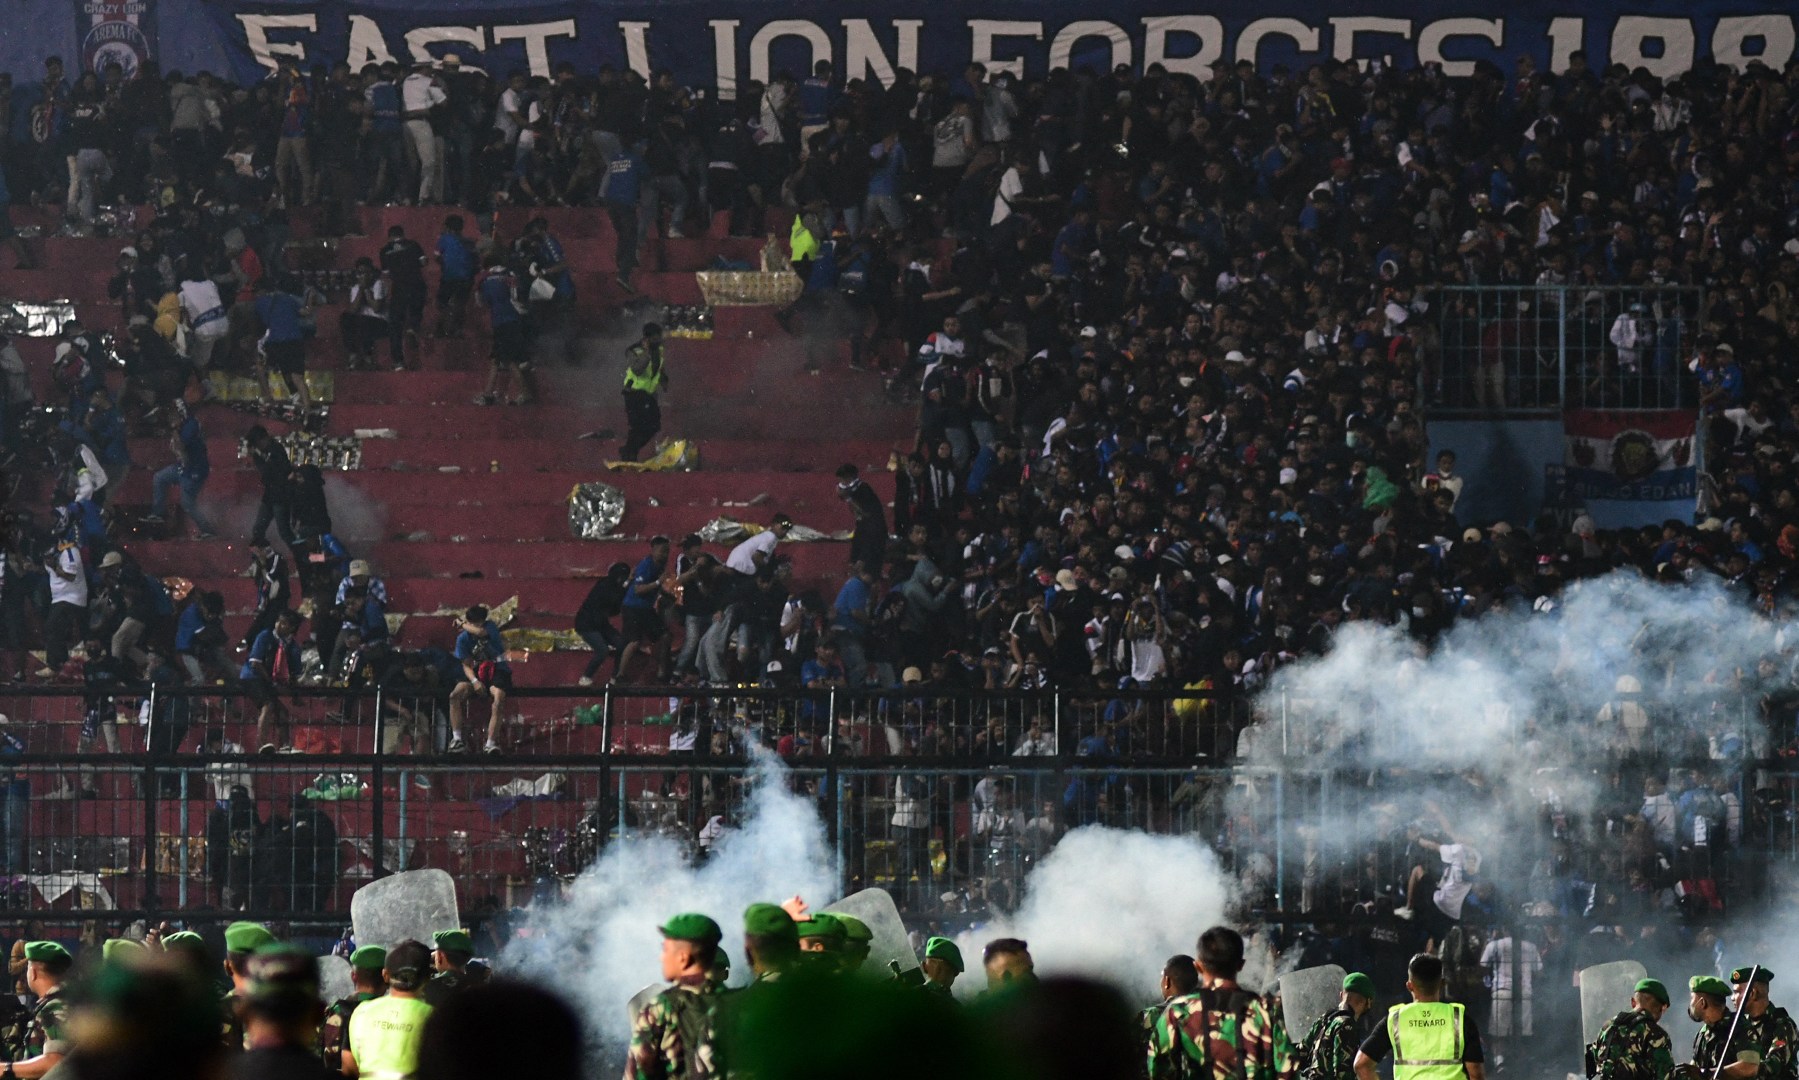 Terinjak-injak maut sepak bola di Indonesia akibat gas air mata: Menteri |  Berita